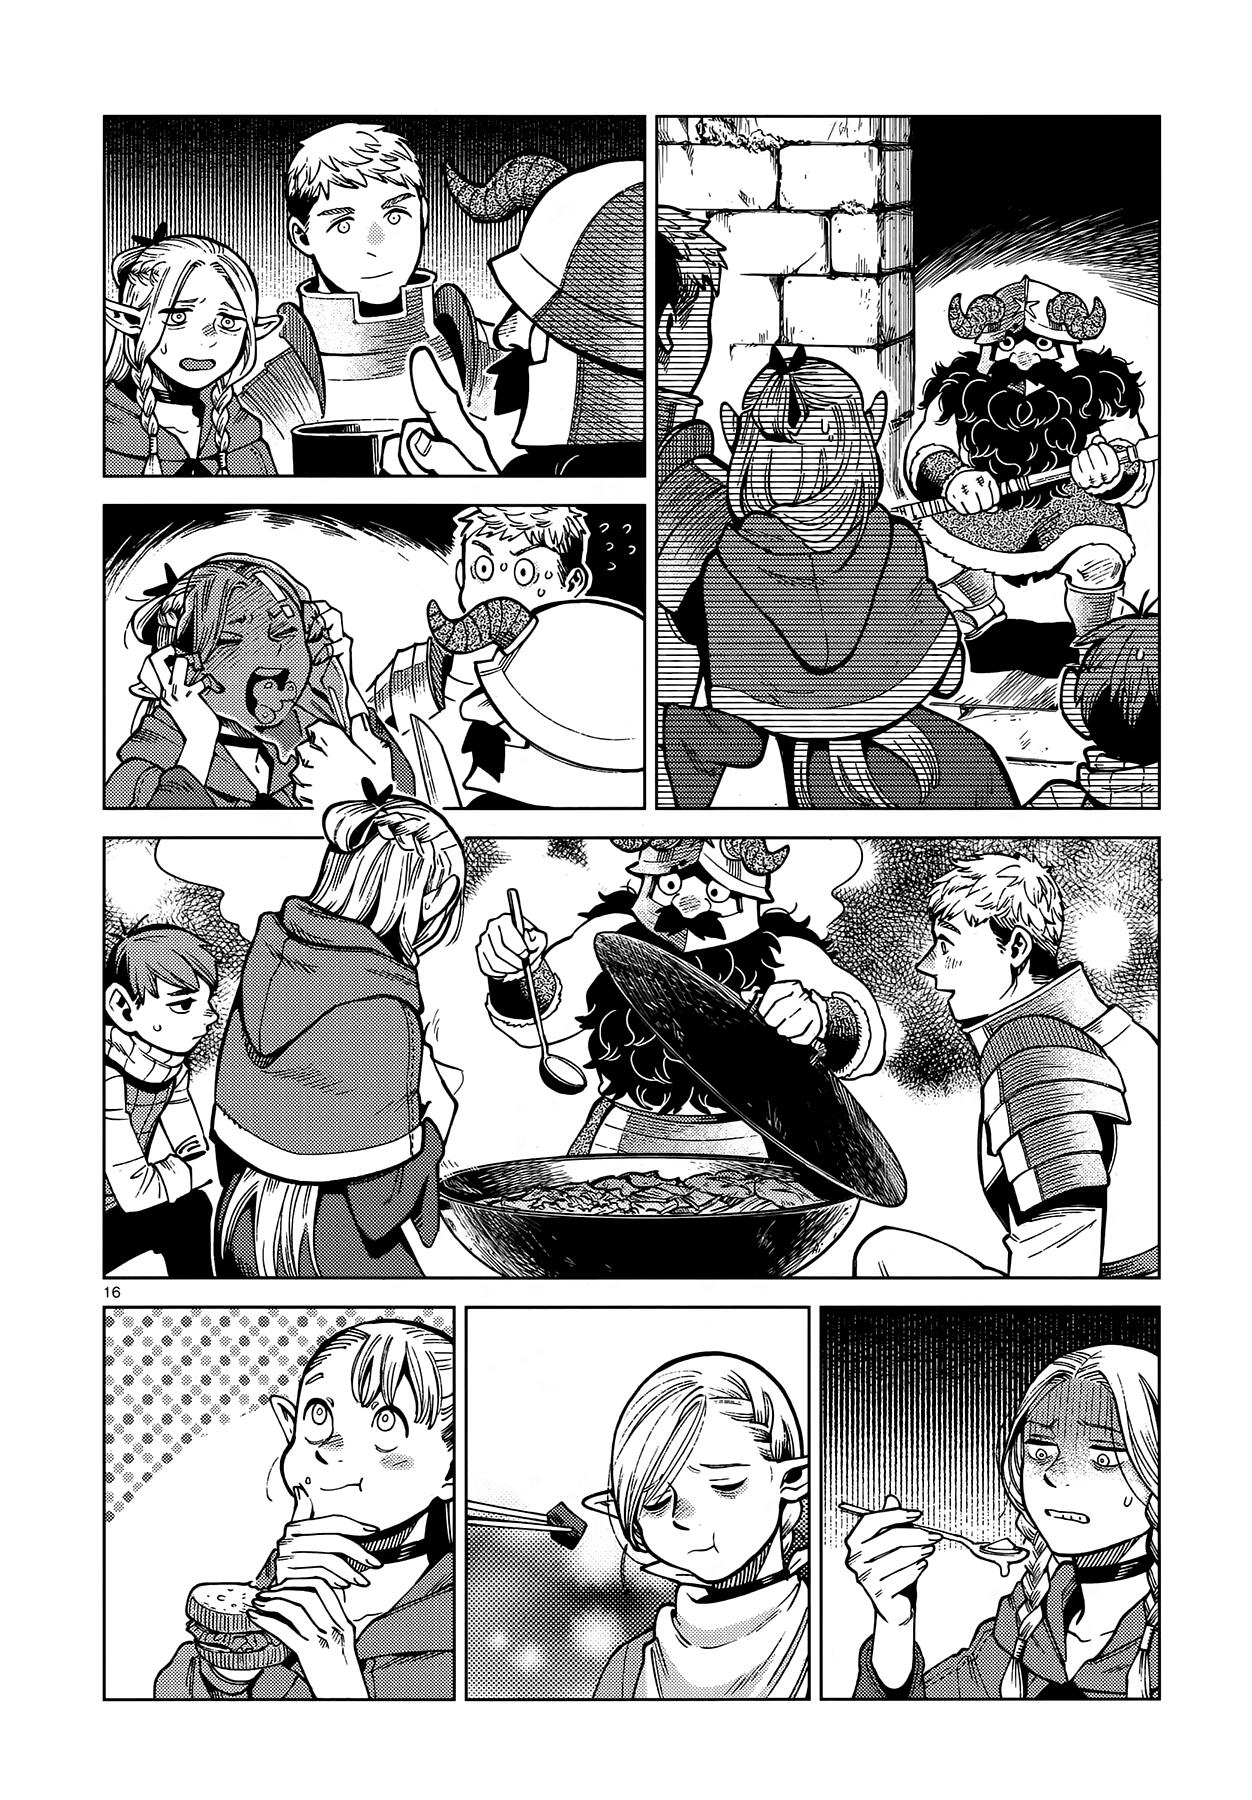 Dungeon Meshi Chapter 75 page 16 - Mangakakalot